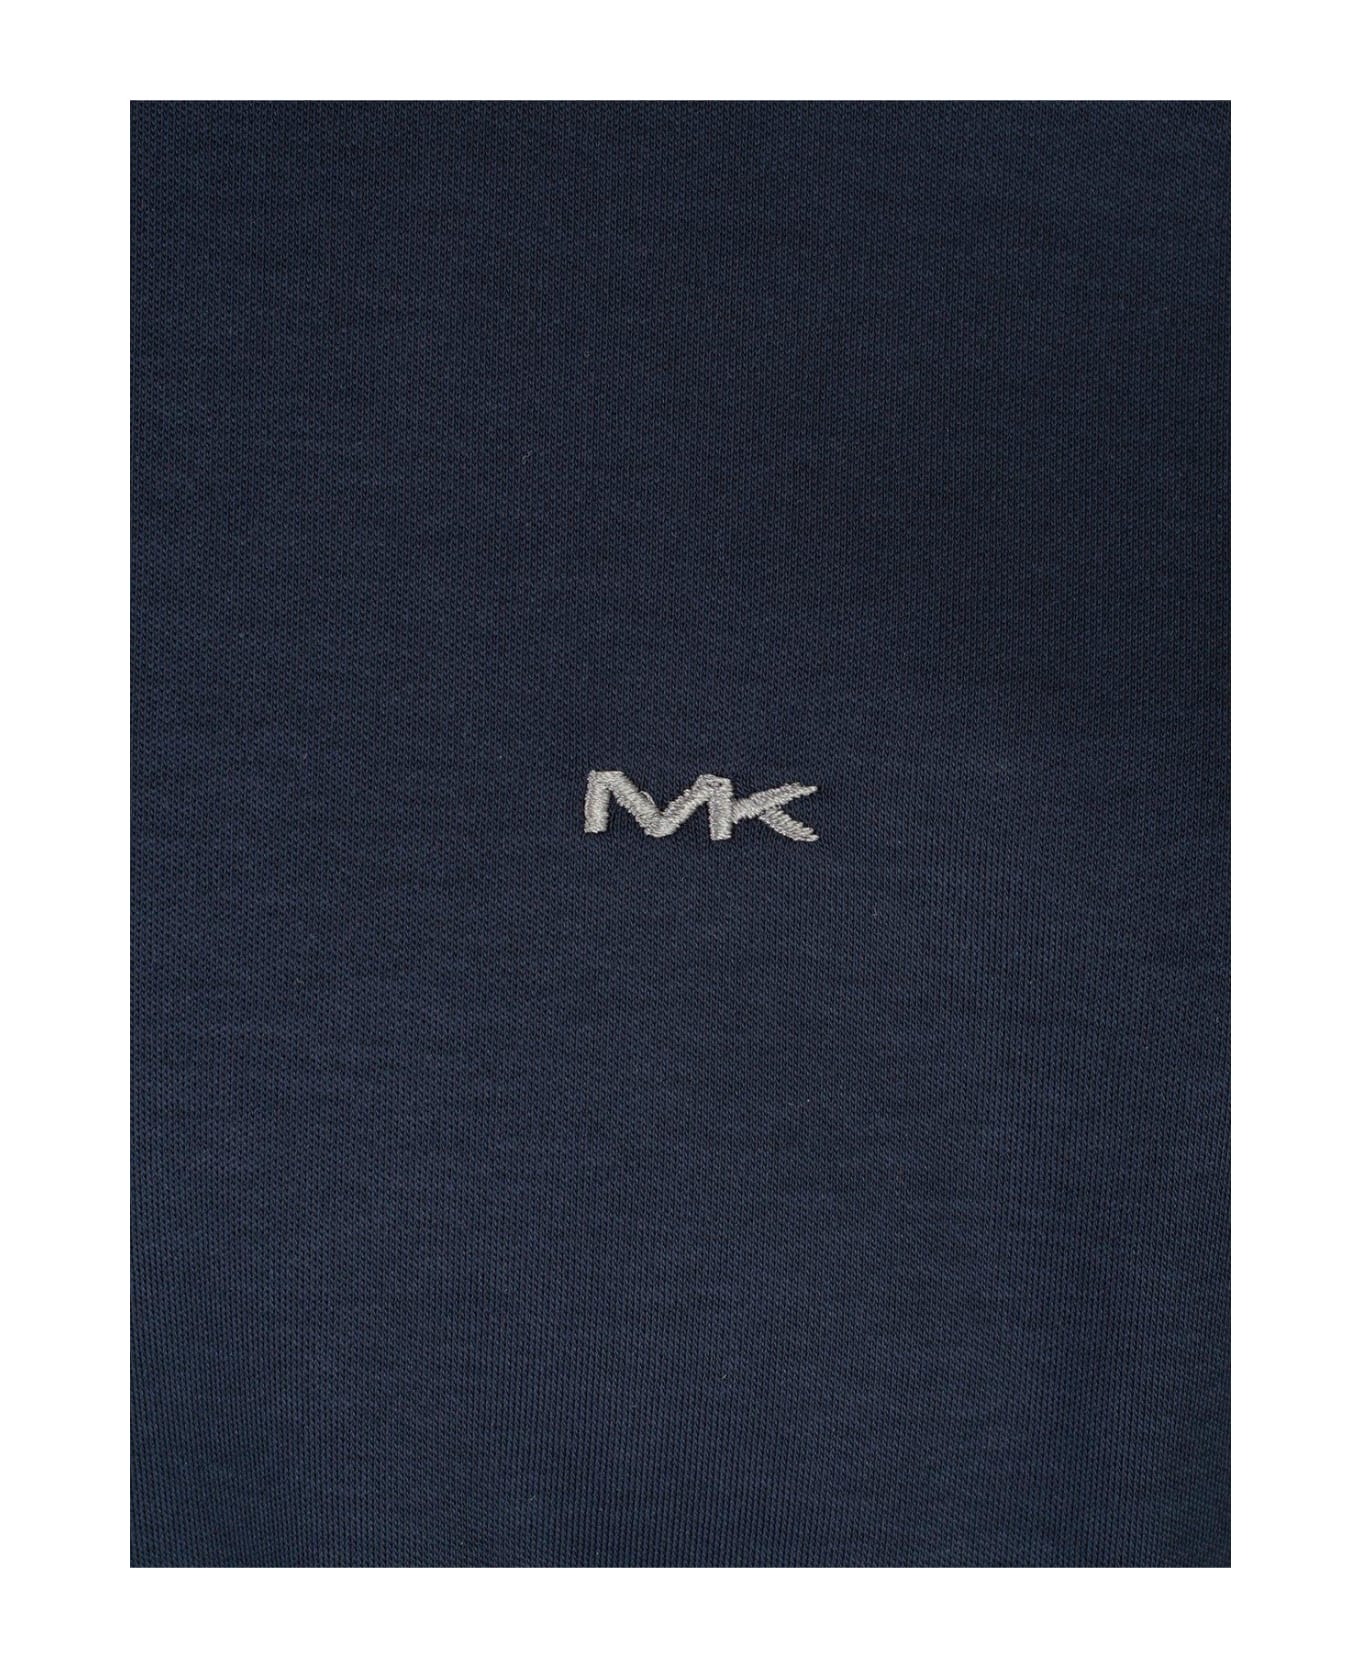 Michael Kors Long Sleeve Sleek Polo Shirt - Midnight シャツ